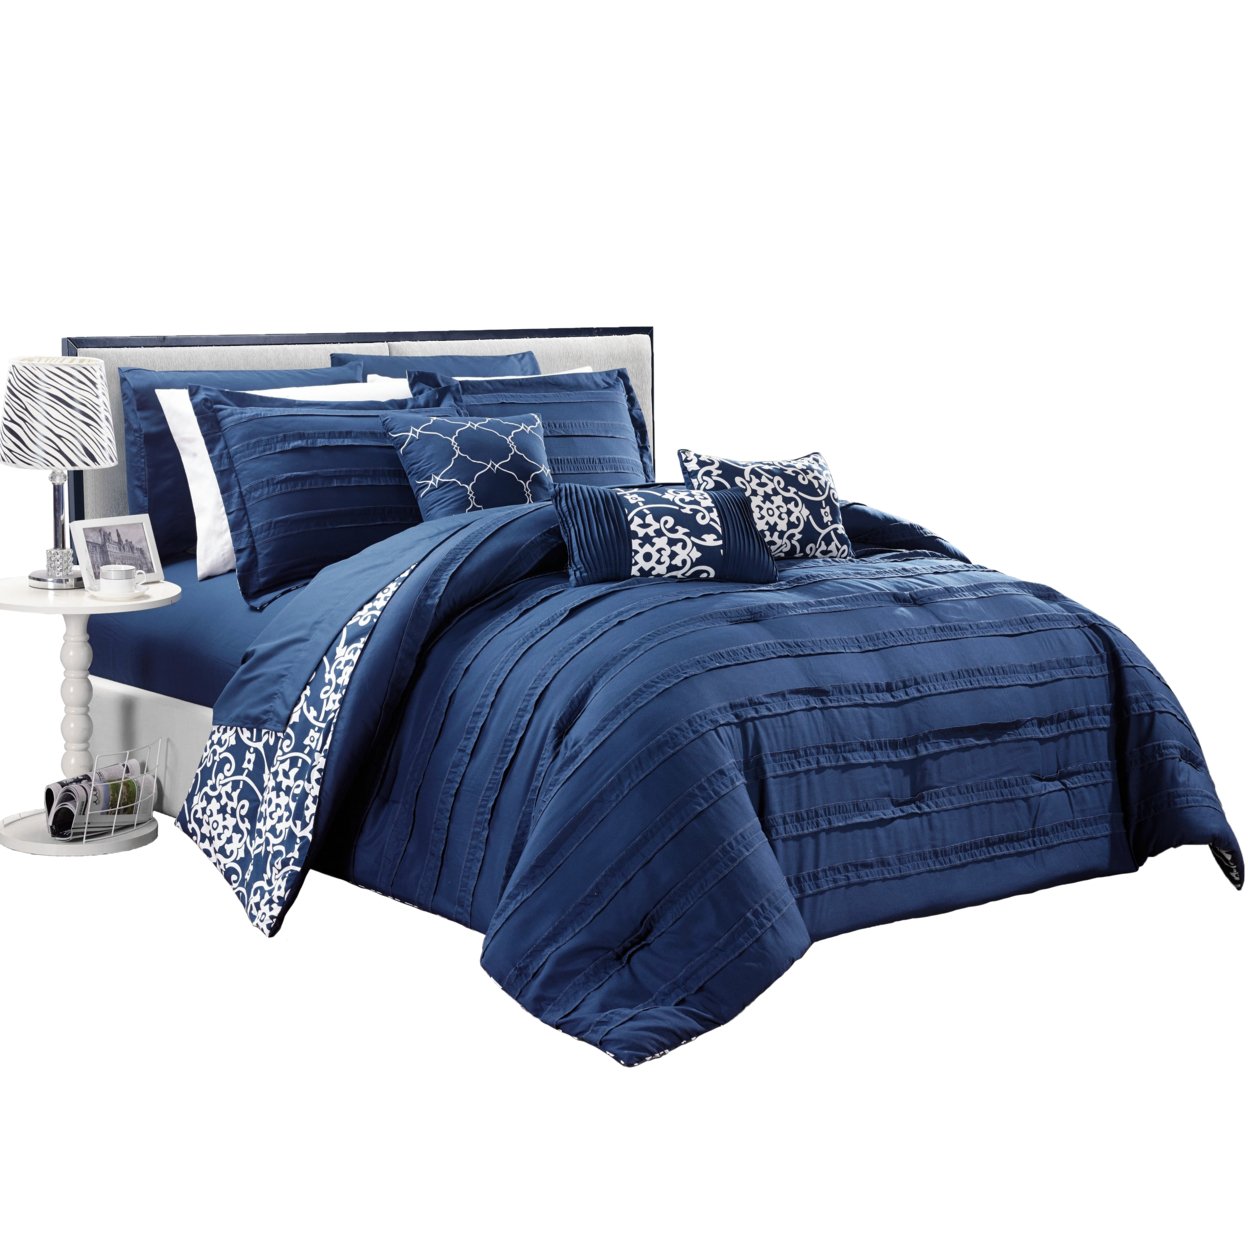 10-Piece Reversible Bed In A Bag Comforter & Sheet Set, Multiple Colors - Grey, King